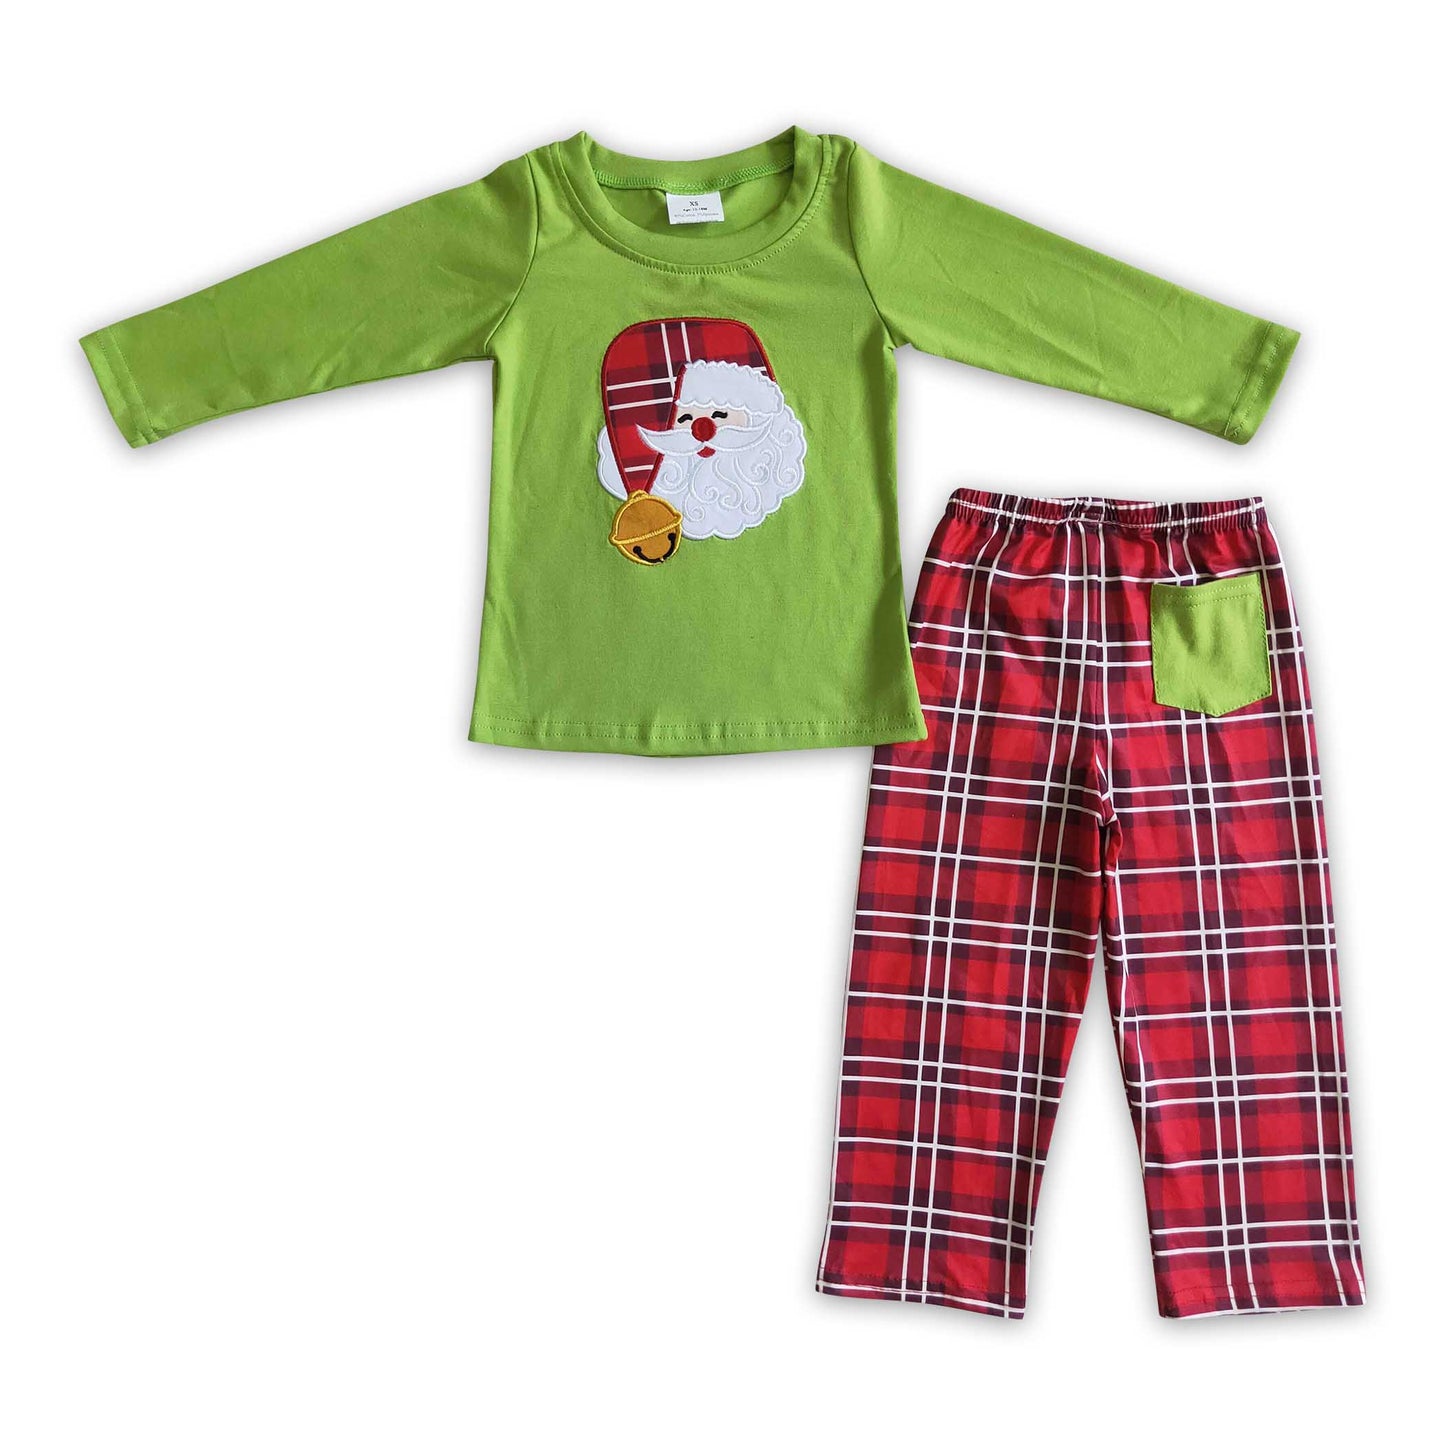 Santa embroidery shirt plaid pants boy Christmas outfits